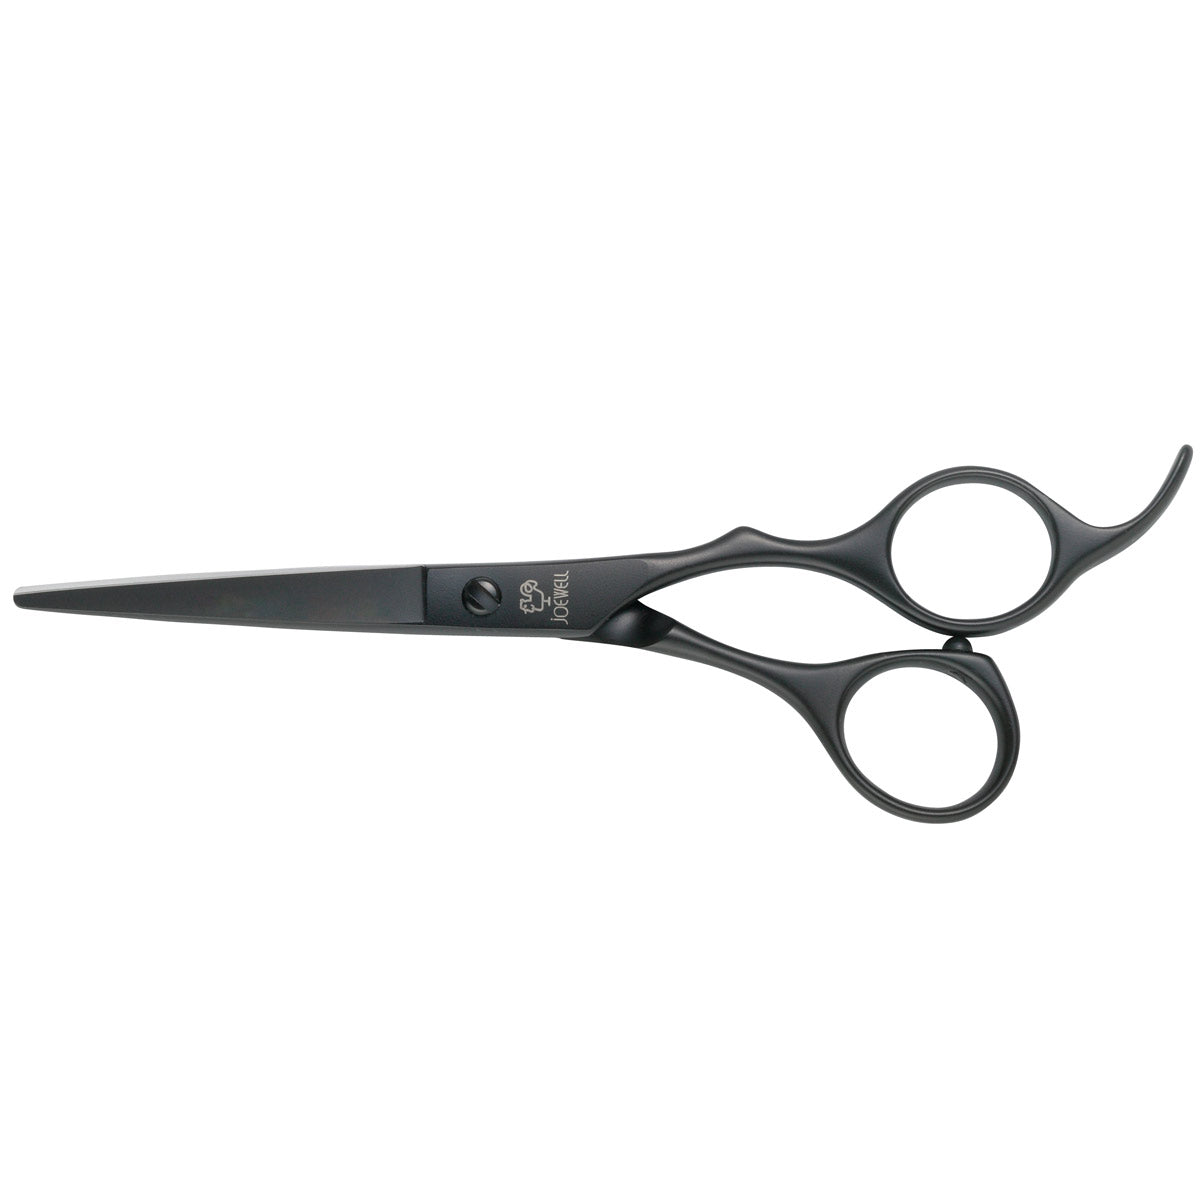 Black Cobalt Offset Shears from Joewell Japan  - 5.5 inch petite, award winning NC5.5f model scissors HairArt Int'l Inc.